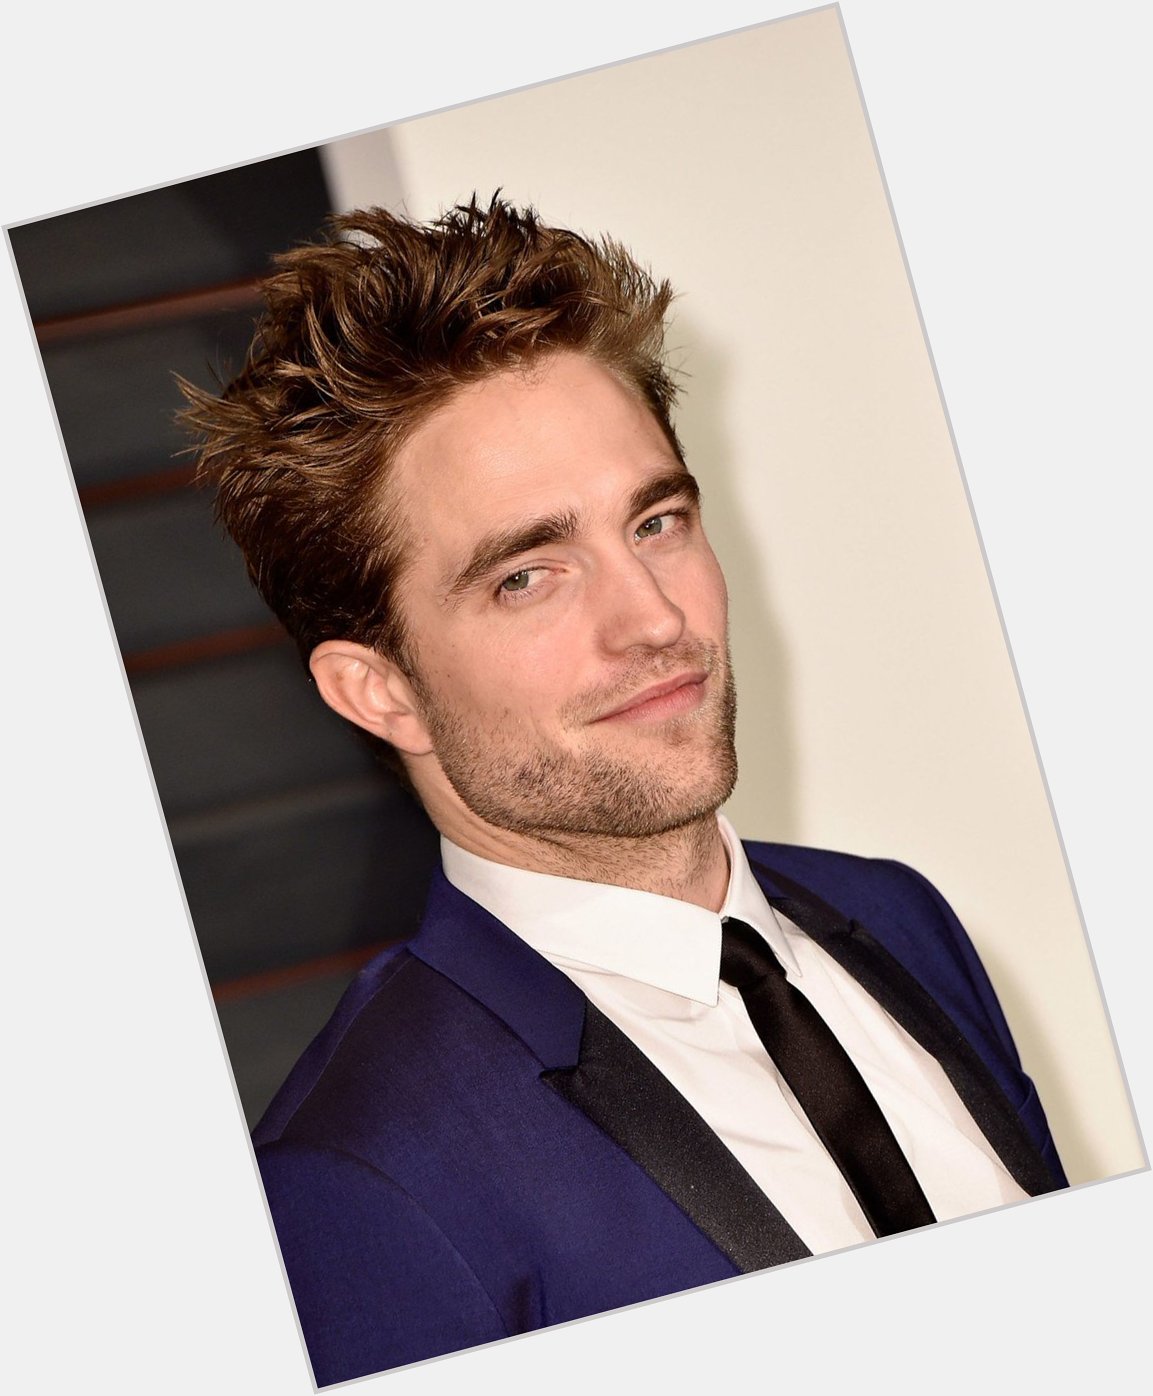 Happy 32nd Birthday Robert Pattinson! He potrayed Cedric Diggory in the films. 